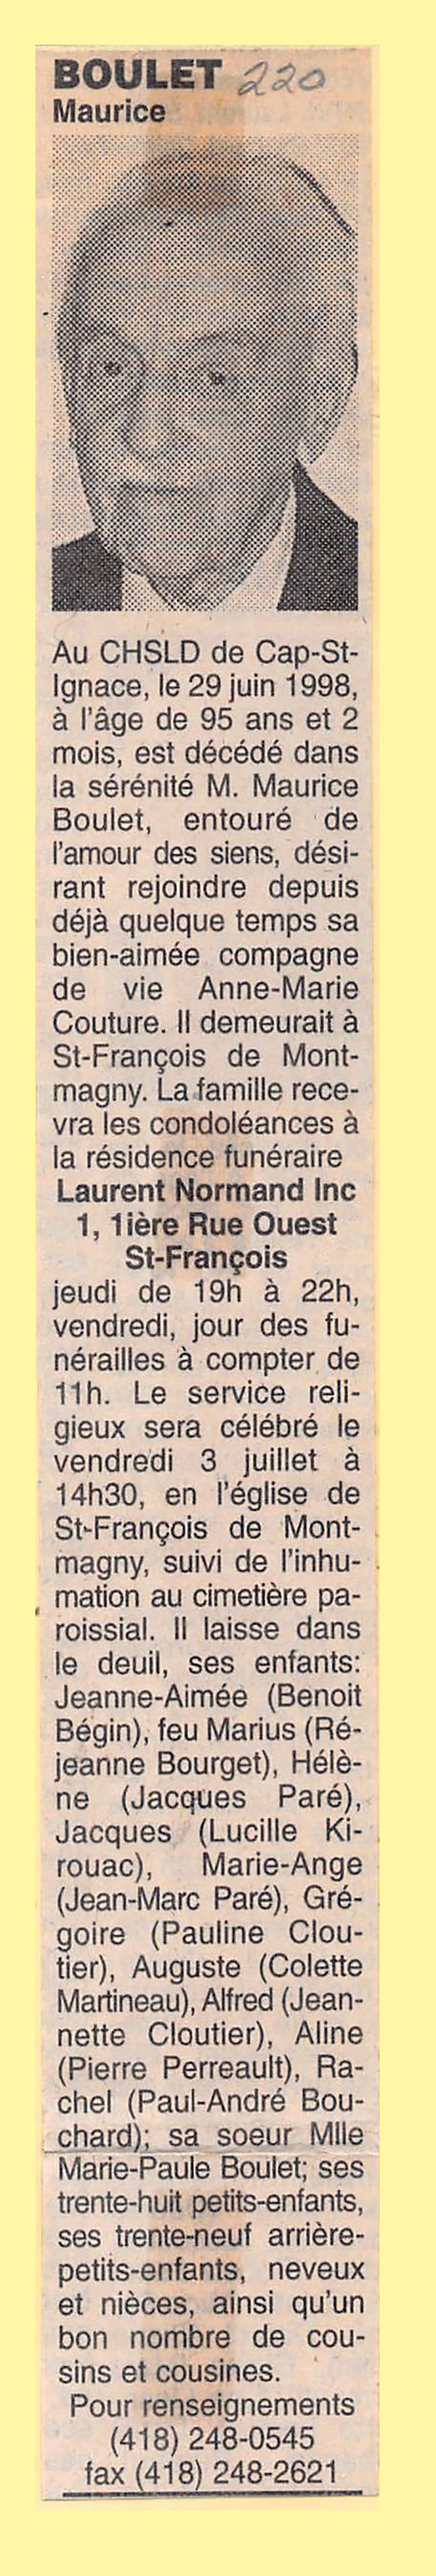 boulet-maurice-1998-adj